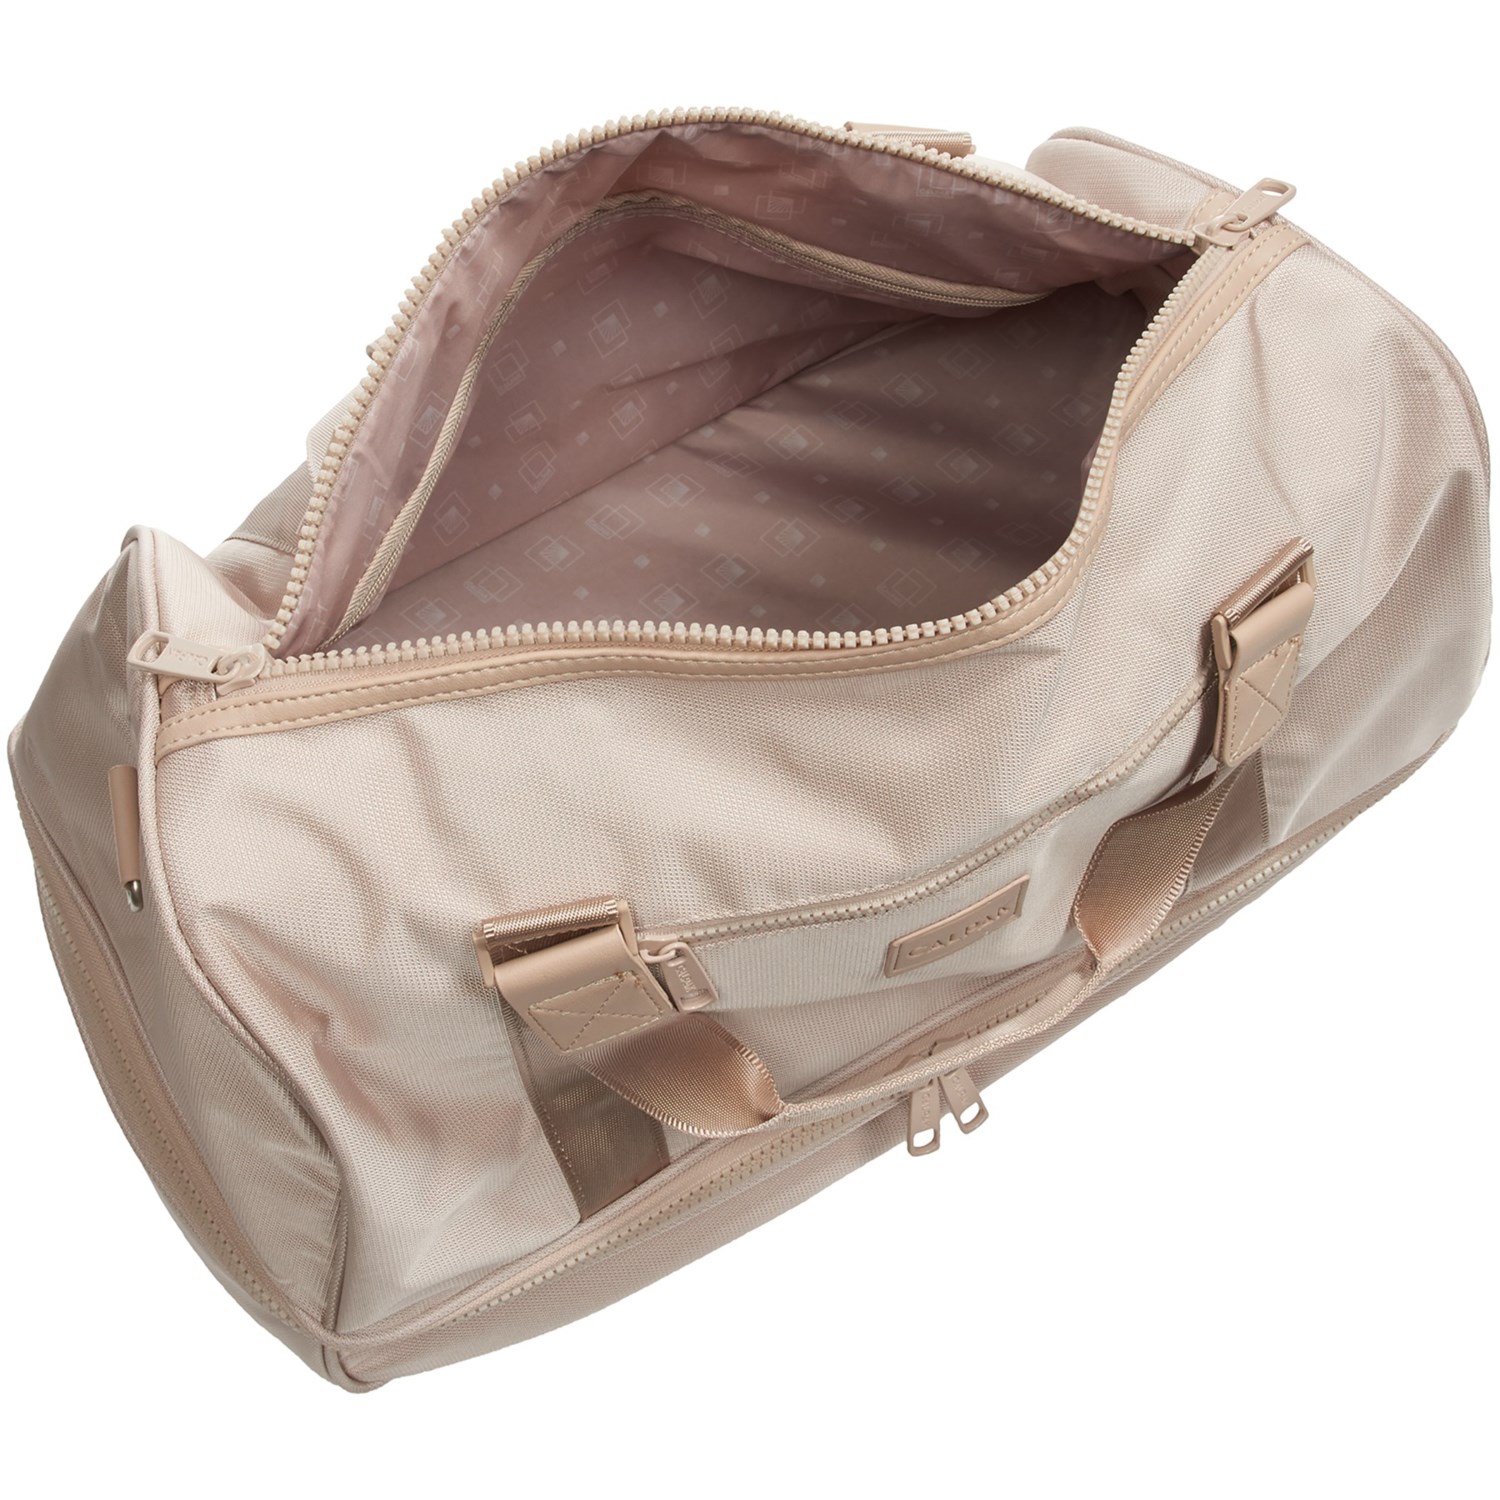 CalPak Calpak Stevyn Duffel Bag - Save 41%